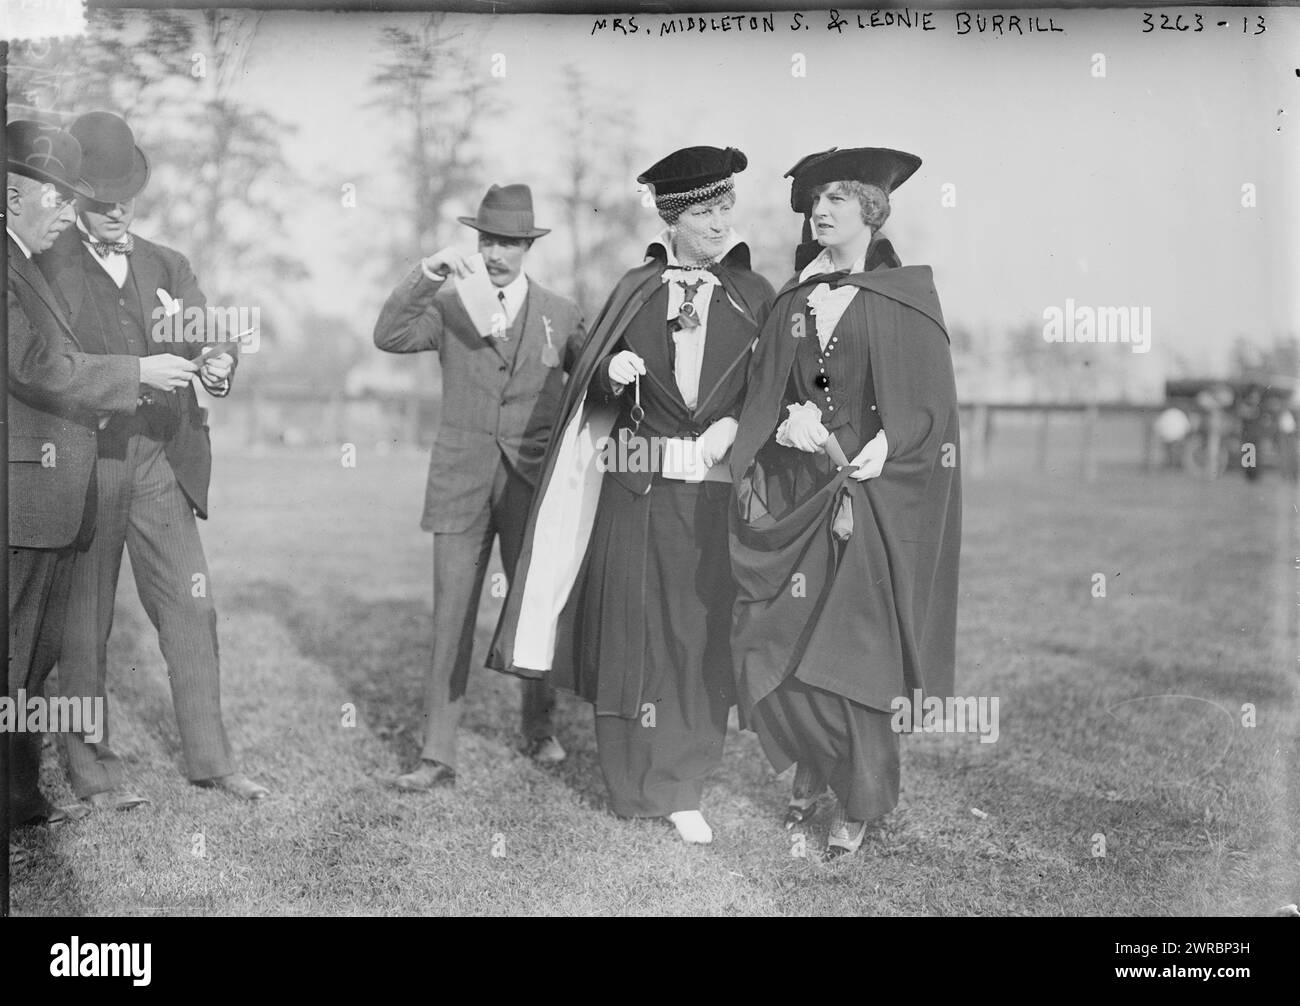 Mrs. Middleton S. & Leonie Burrill, 13. Oktober 1914, Glasnegative, 1 negativ: Glas Stockfoto